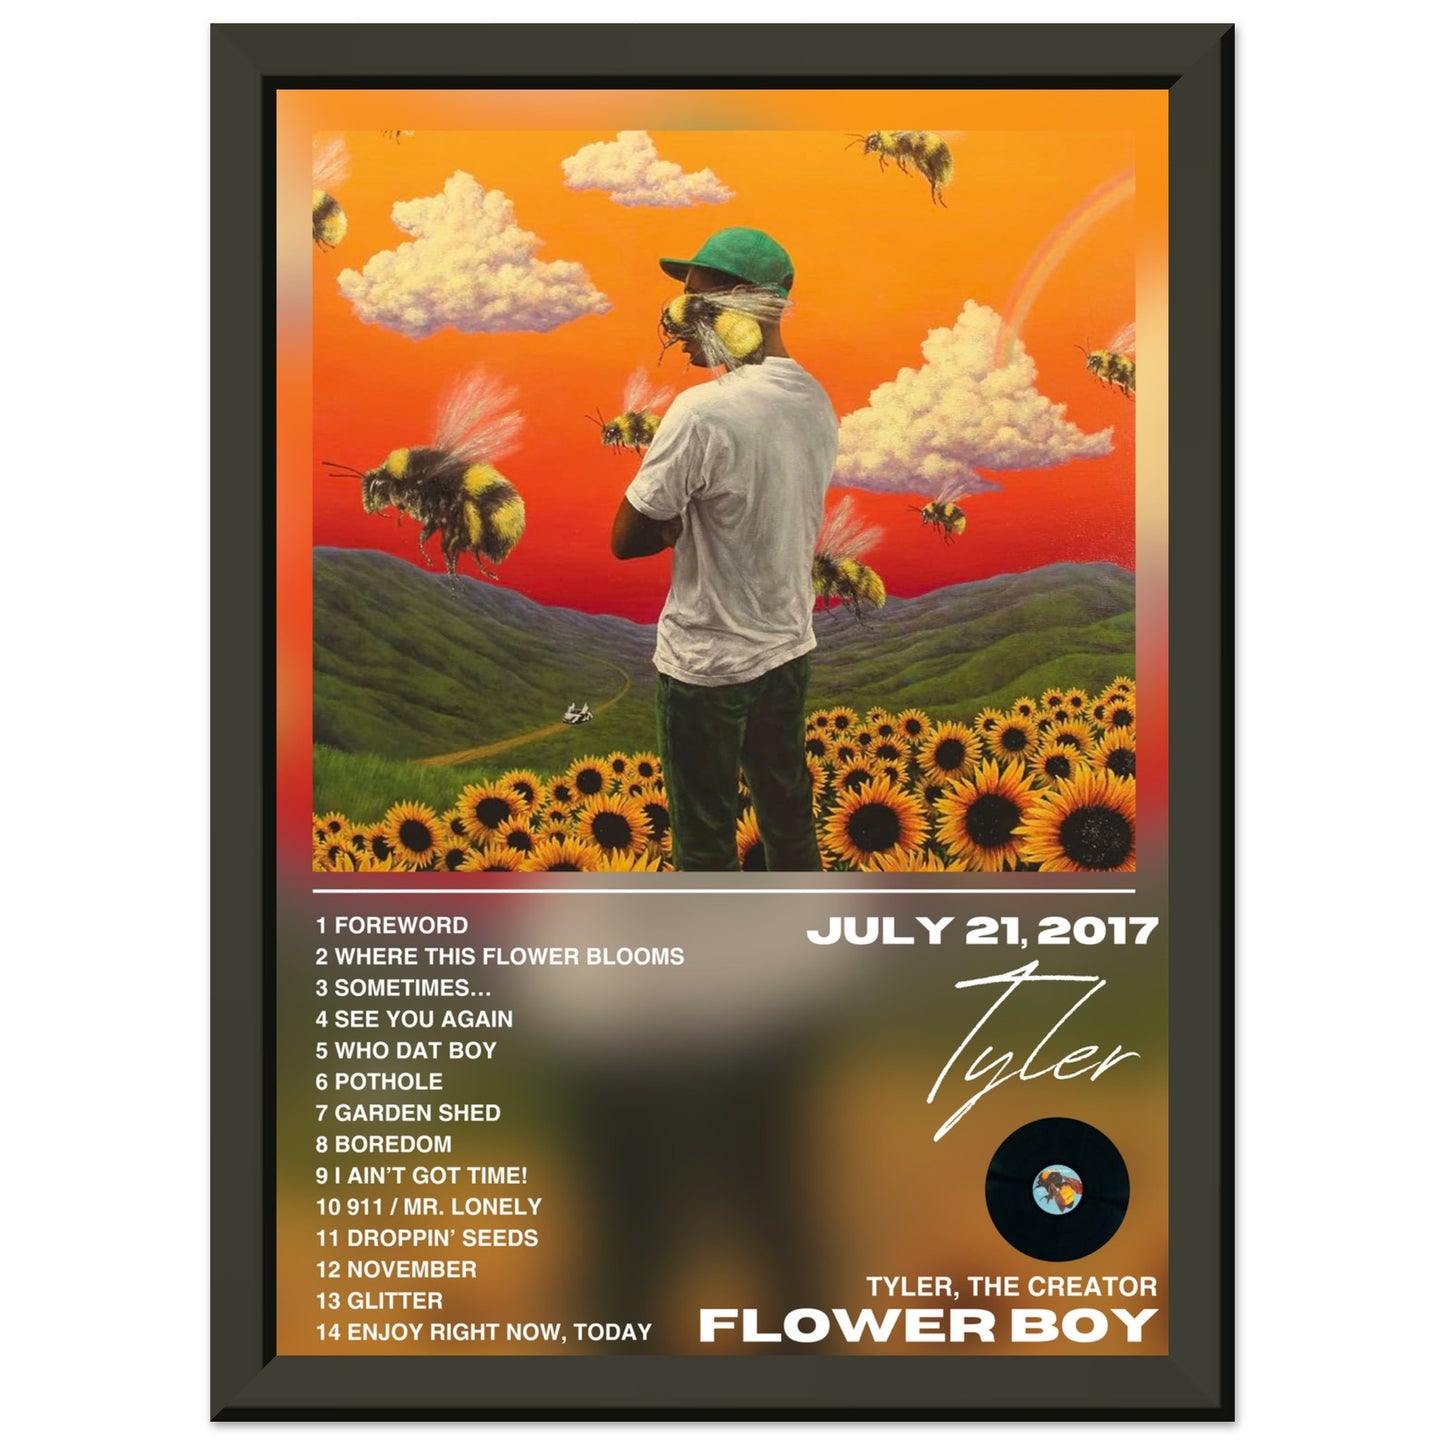 Tyler, The Creator "FLOWER BOY"